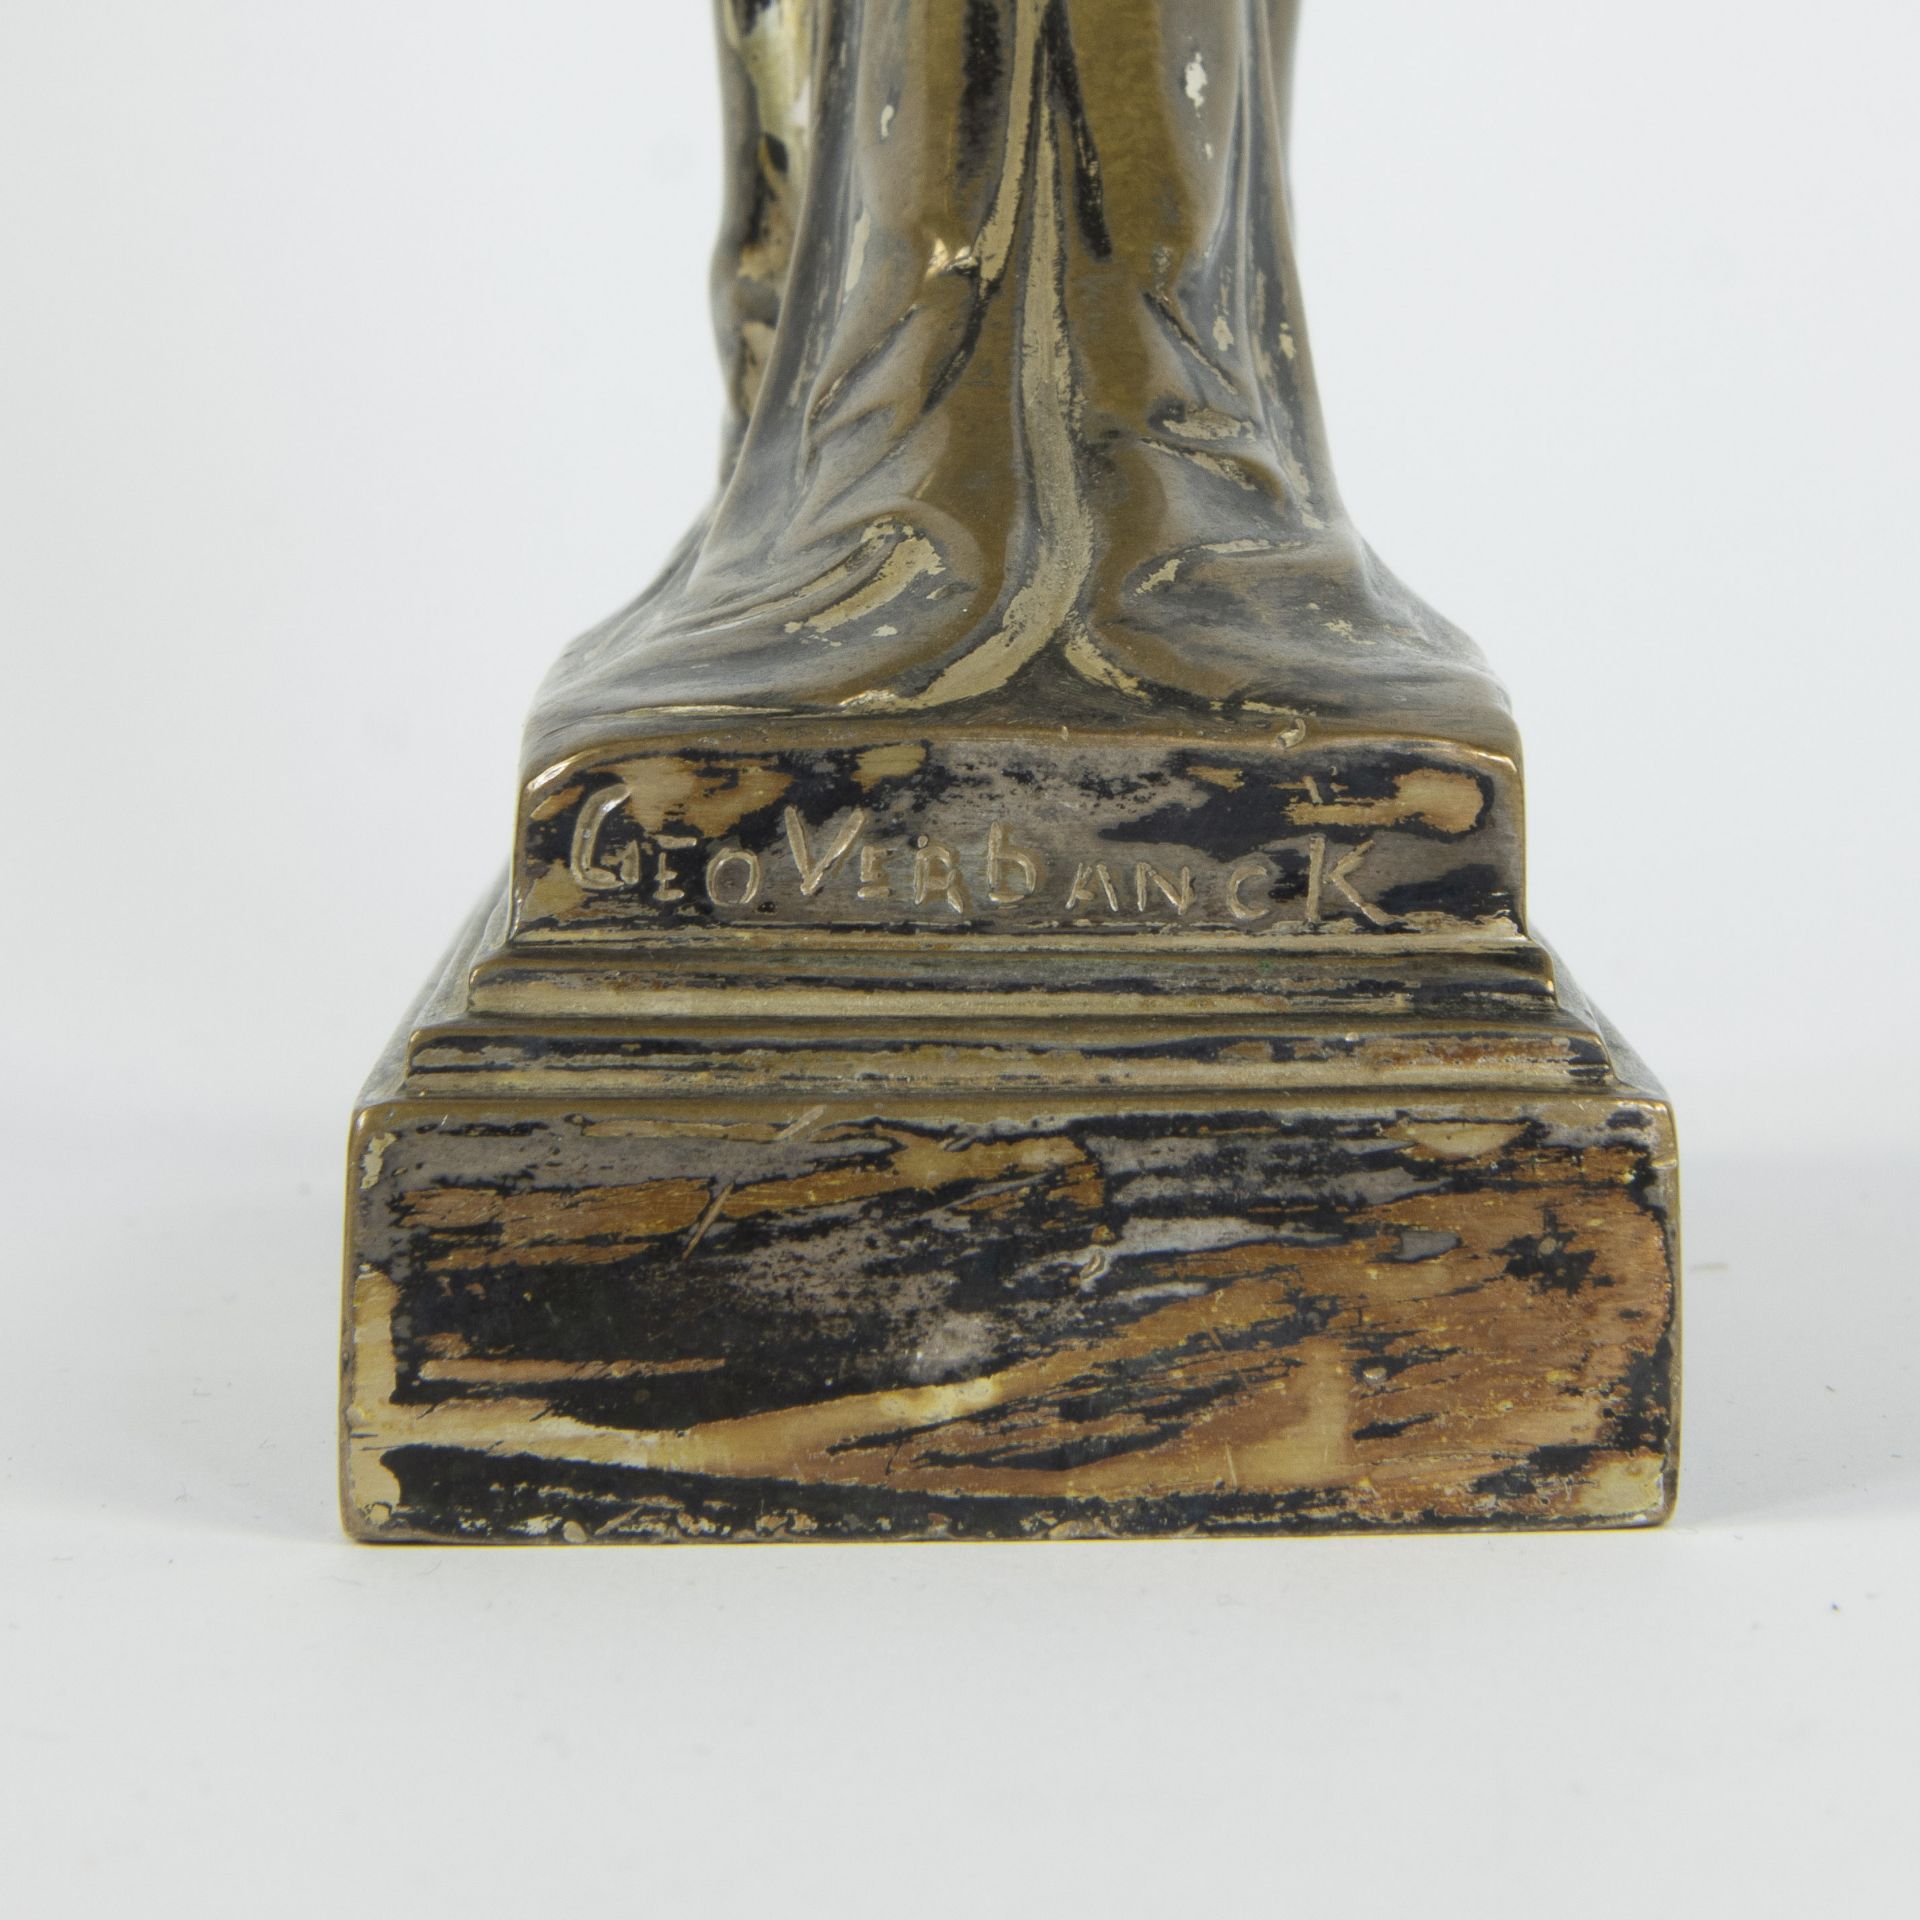 Geo VERBANCK (1881-1961), bronze sculpture 'Le désir', signed - Image 6 of 6